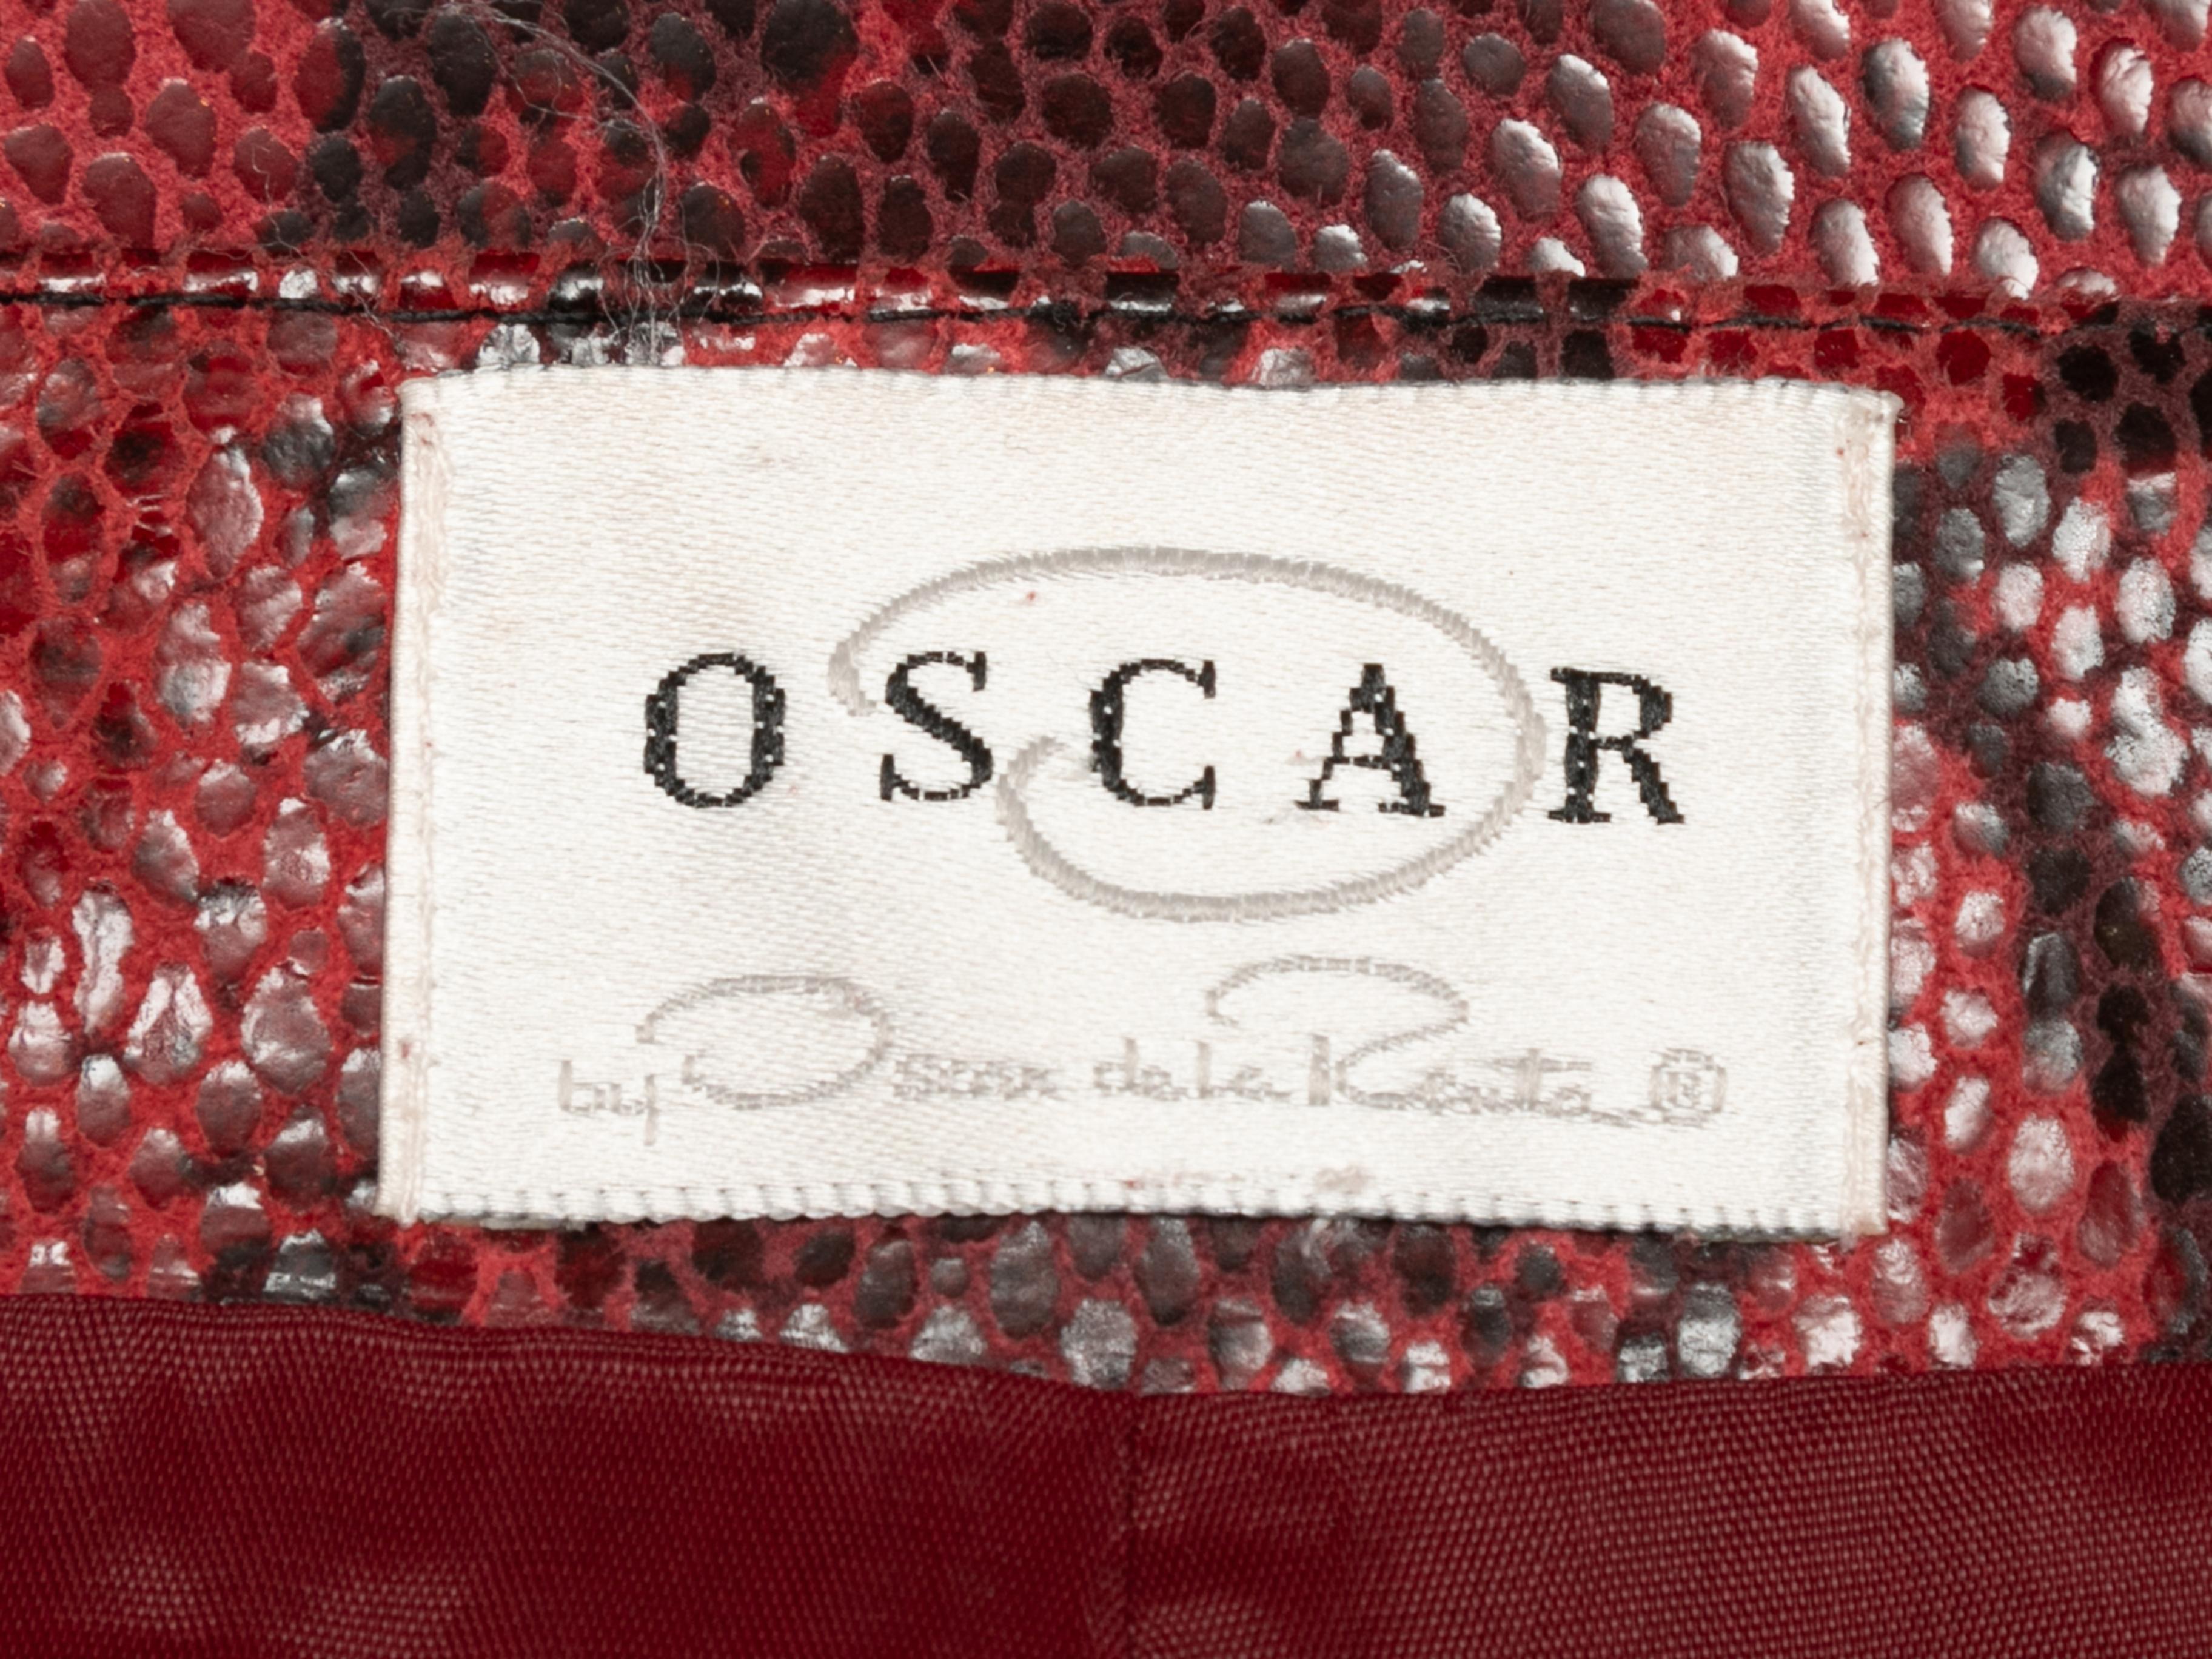 Red and black faux snakeskin skirt by Oscar de la Renta. Zip closure at back. 32